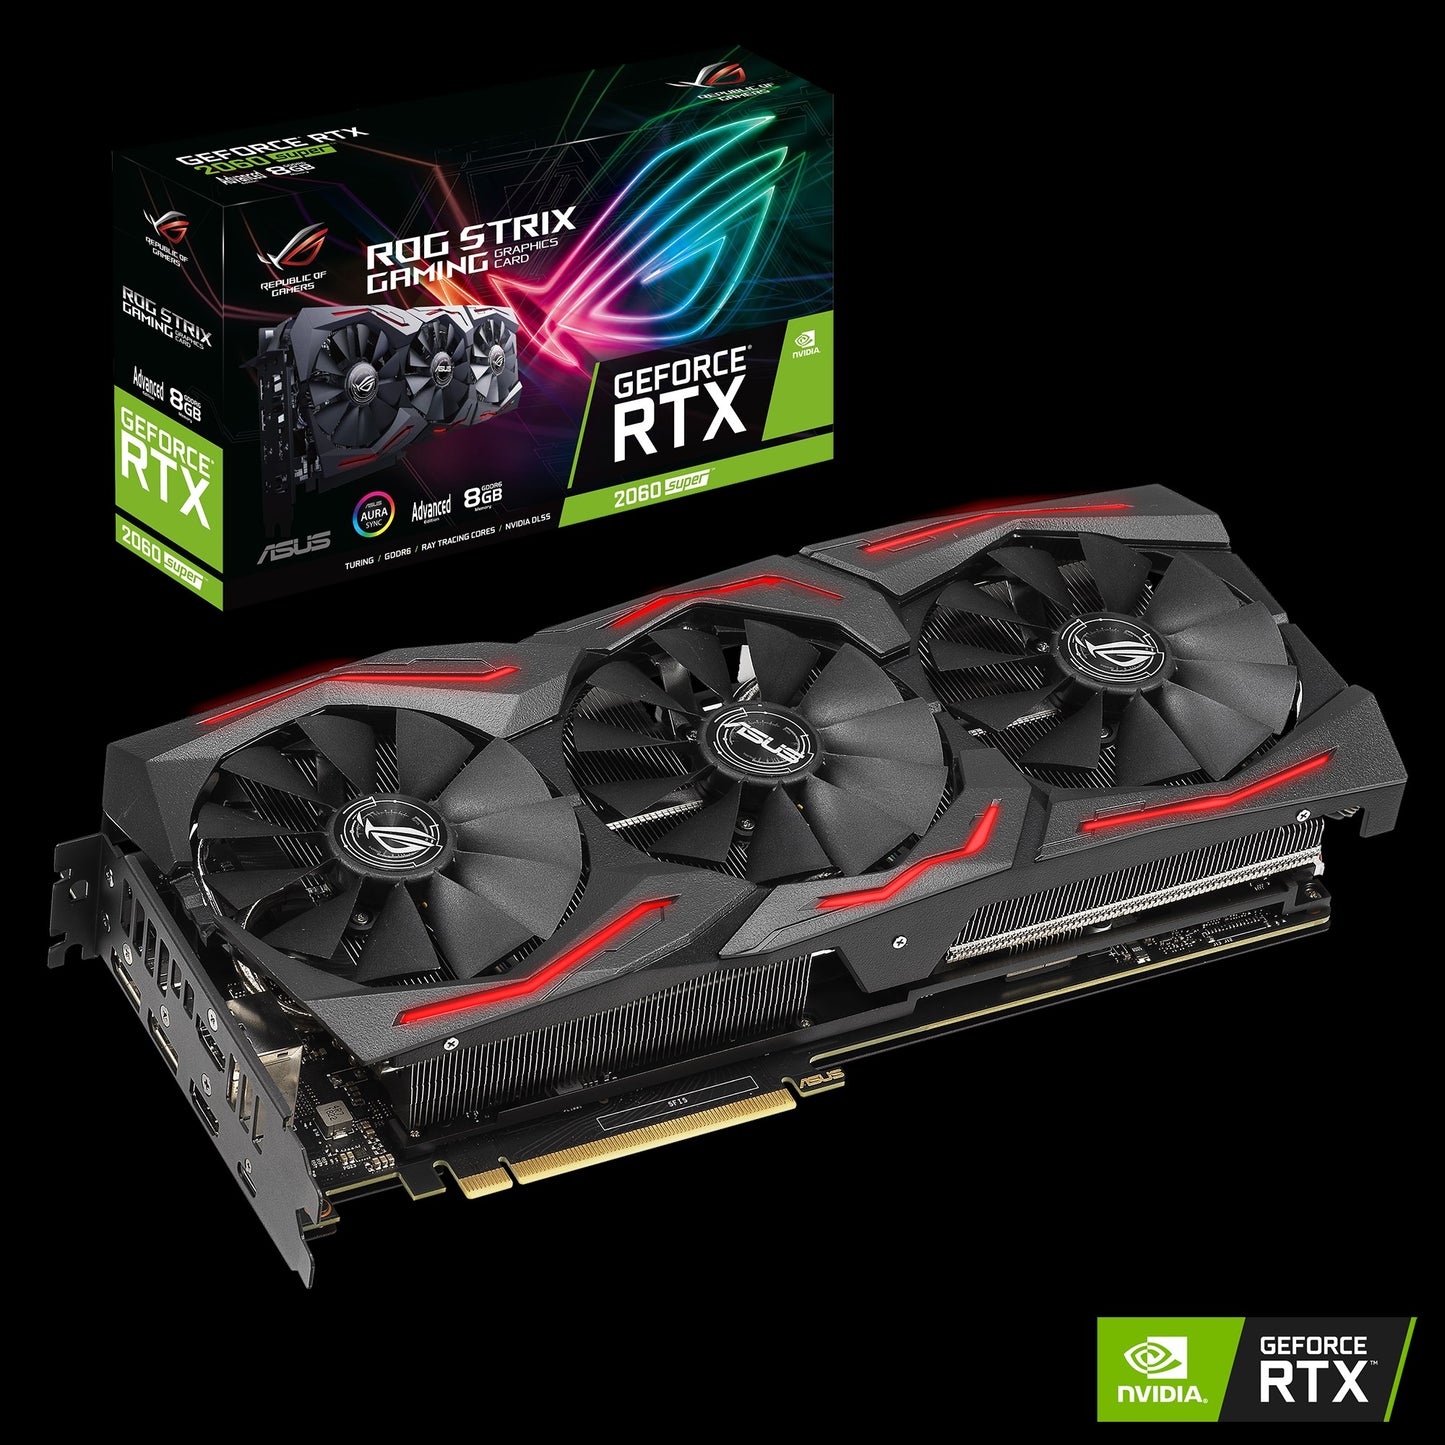 Asus ROG Strix GeForce® RTX 2060 SUPER™ Advanced edition 8GB GDDR6